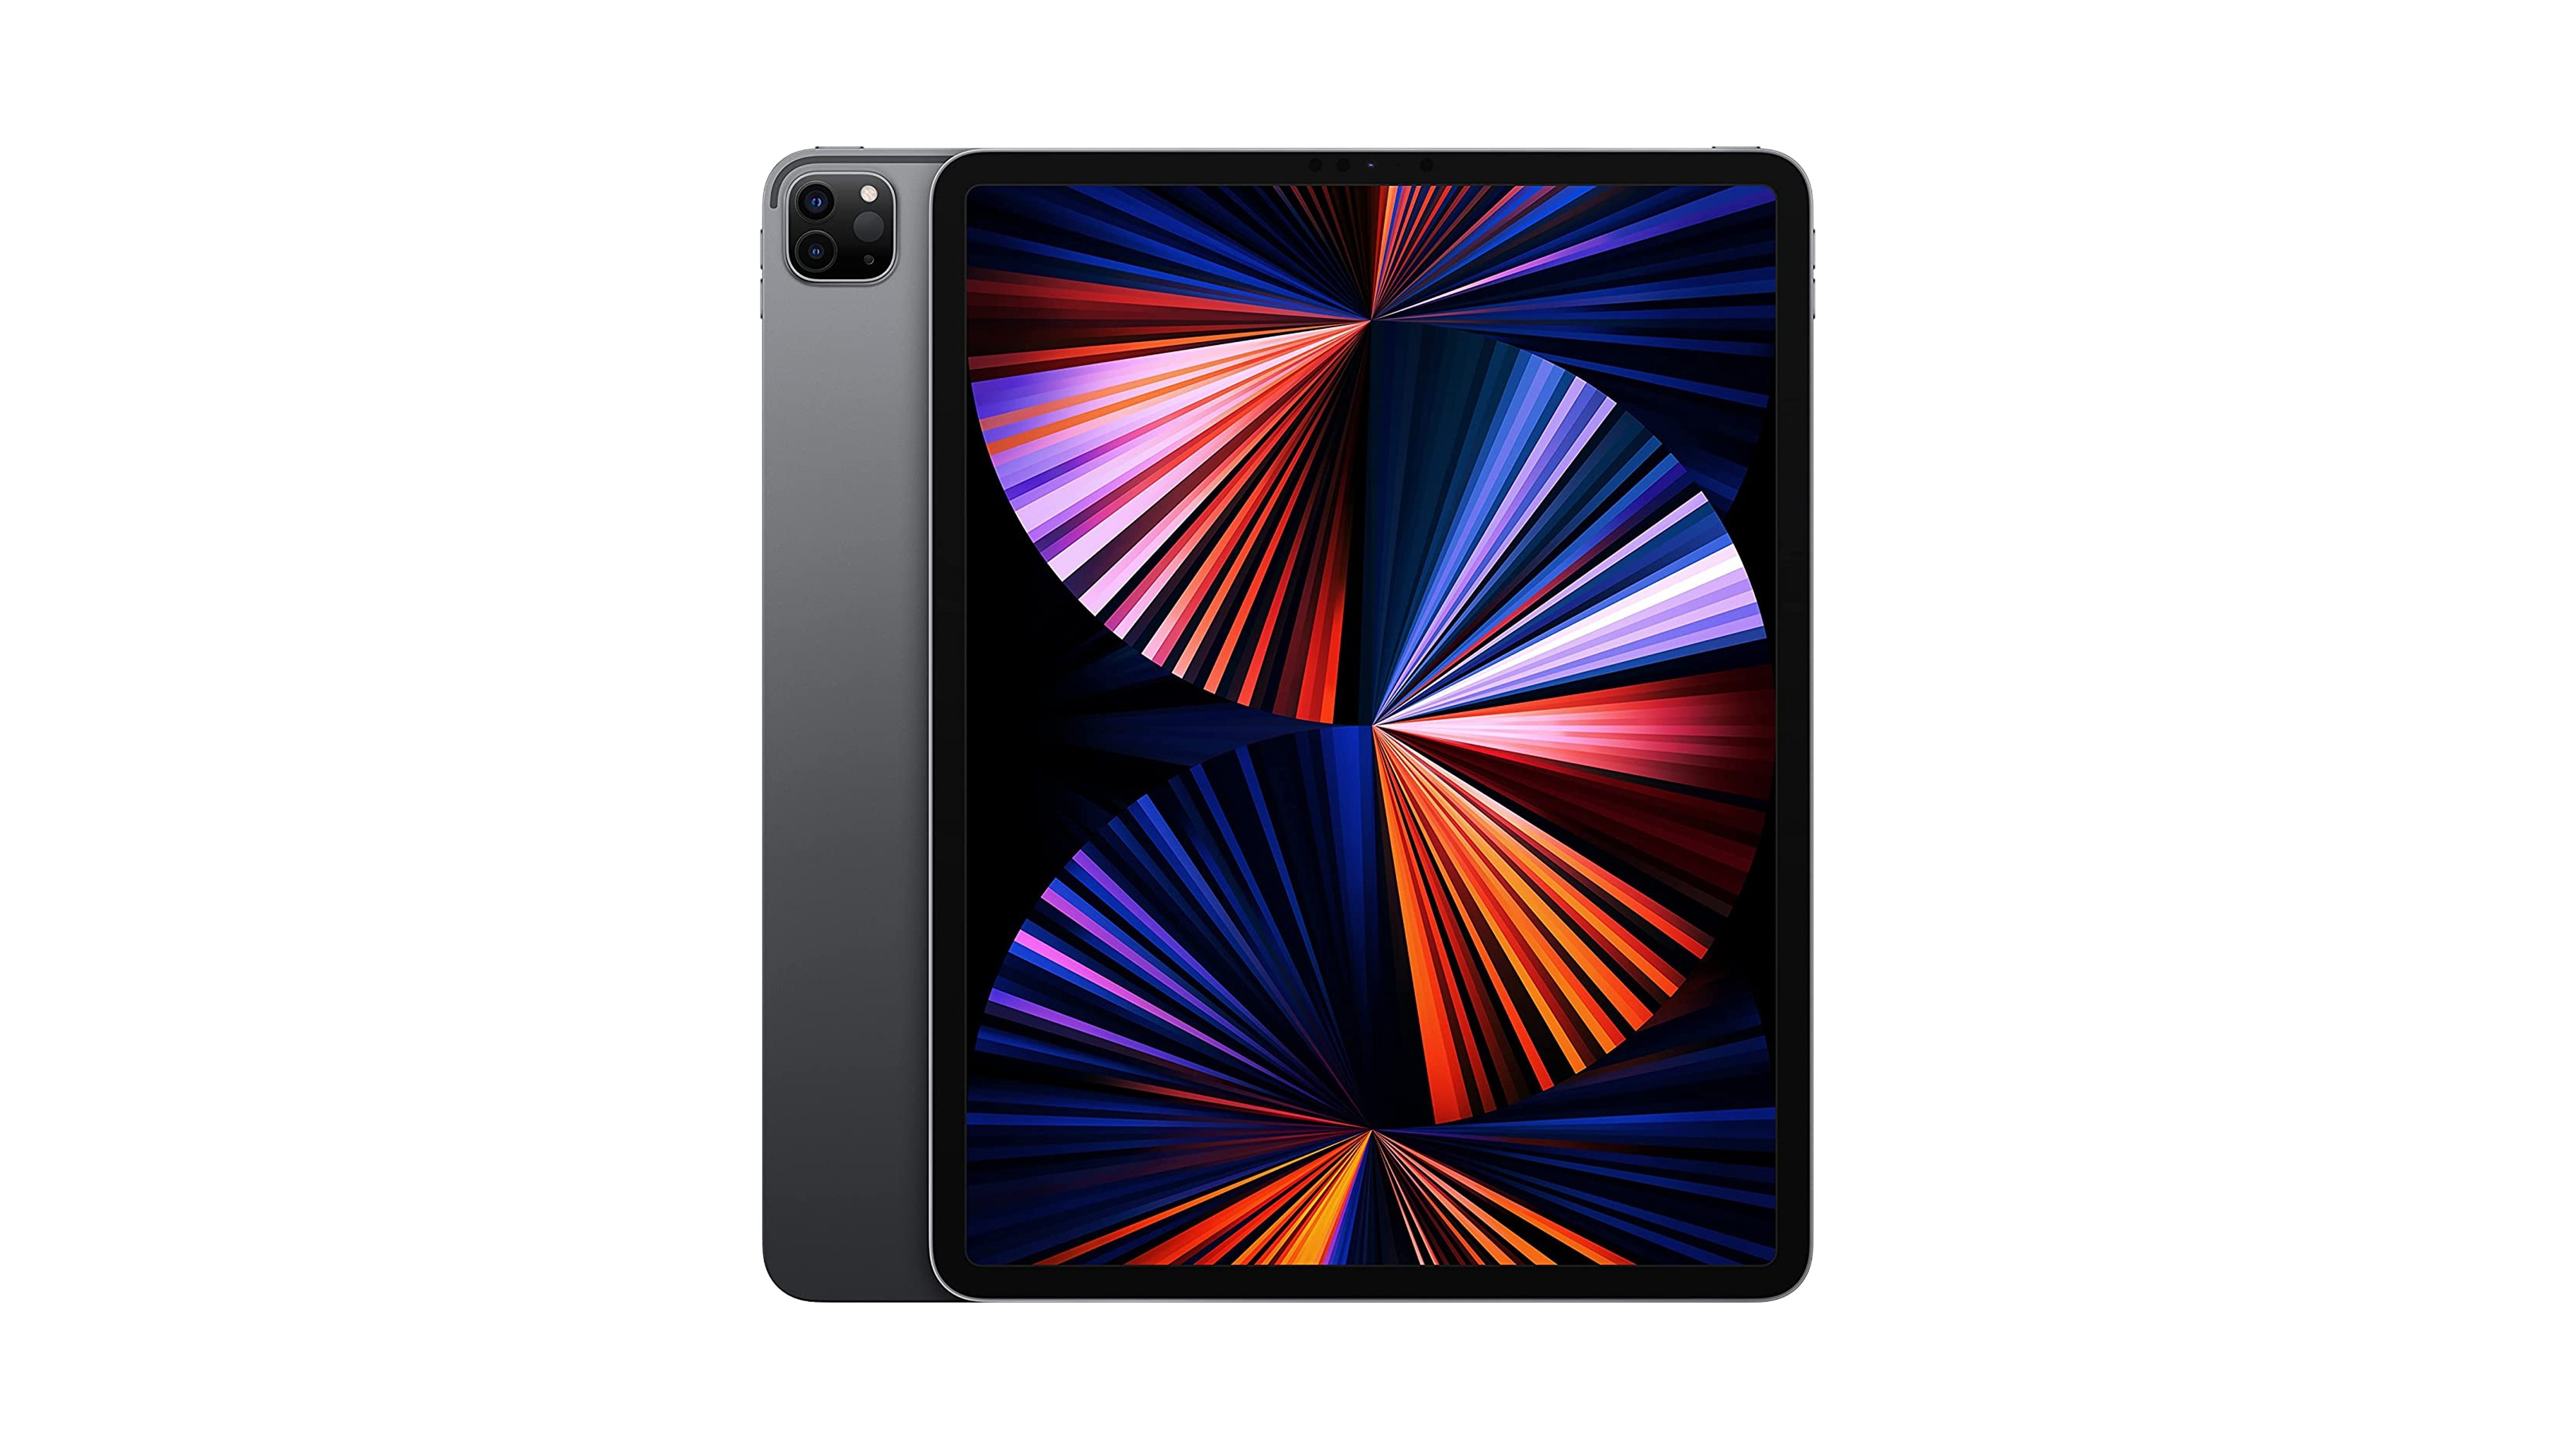 iPad Pro 12.9 inch